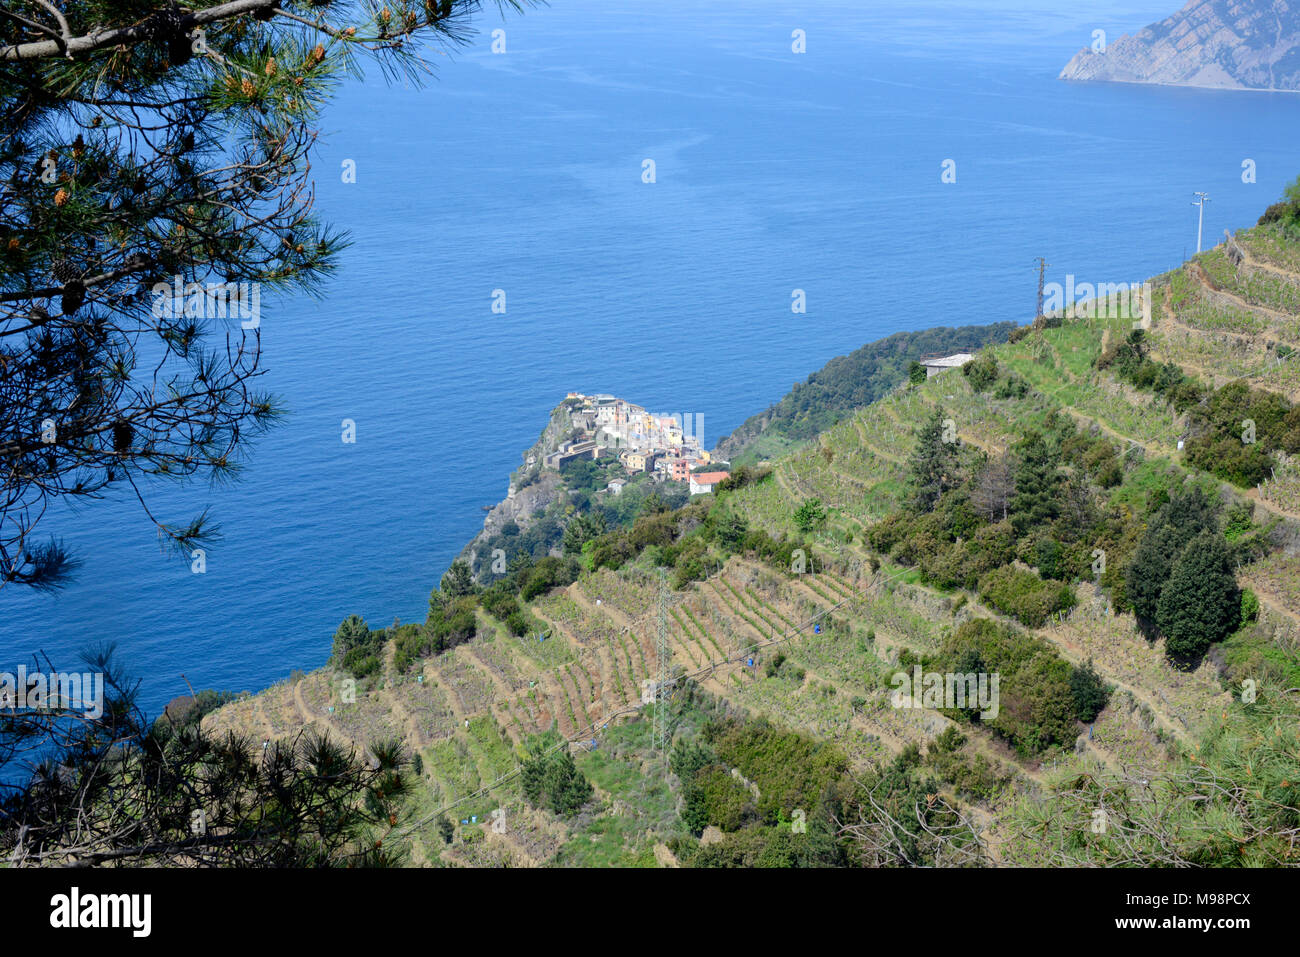 Vineyard, wine growing at Corniglia, UNESCO world heritage site, Cinque Terre, Liguria di Levante, Italy, Mediterranean sea, Europe Stock Photo